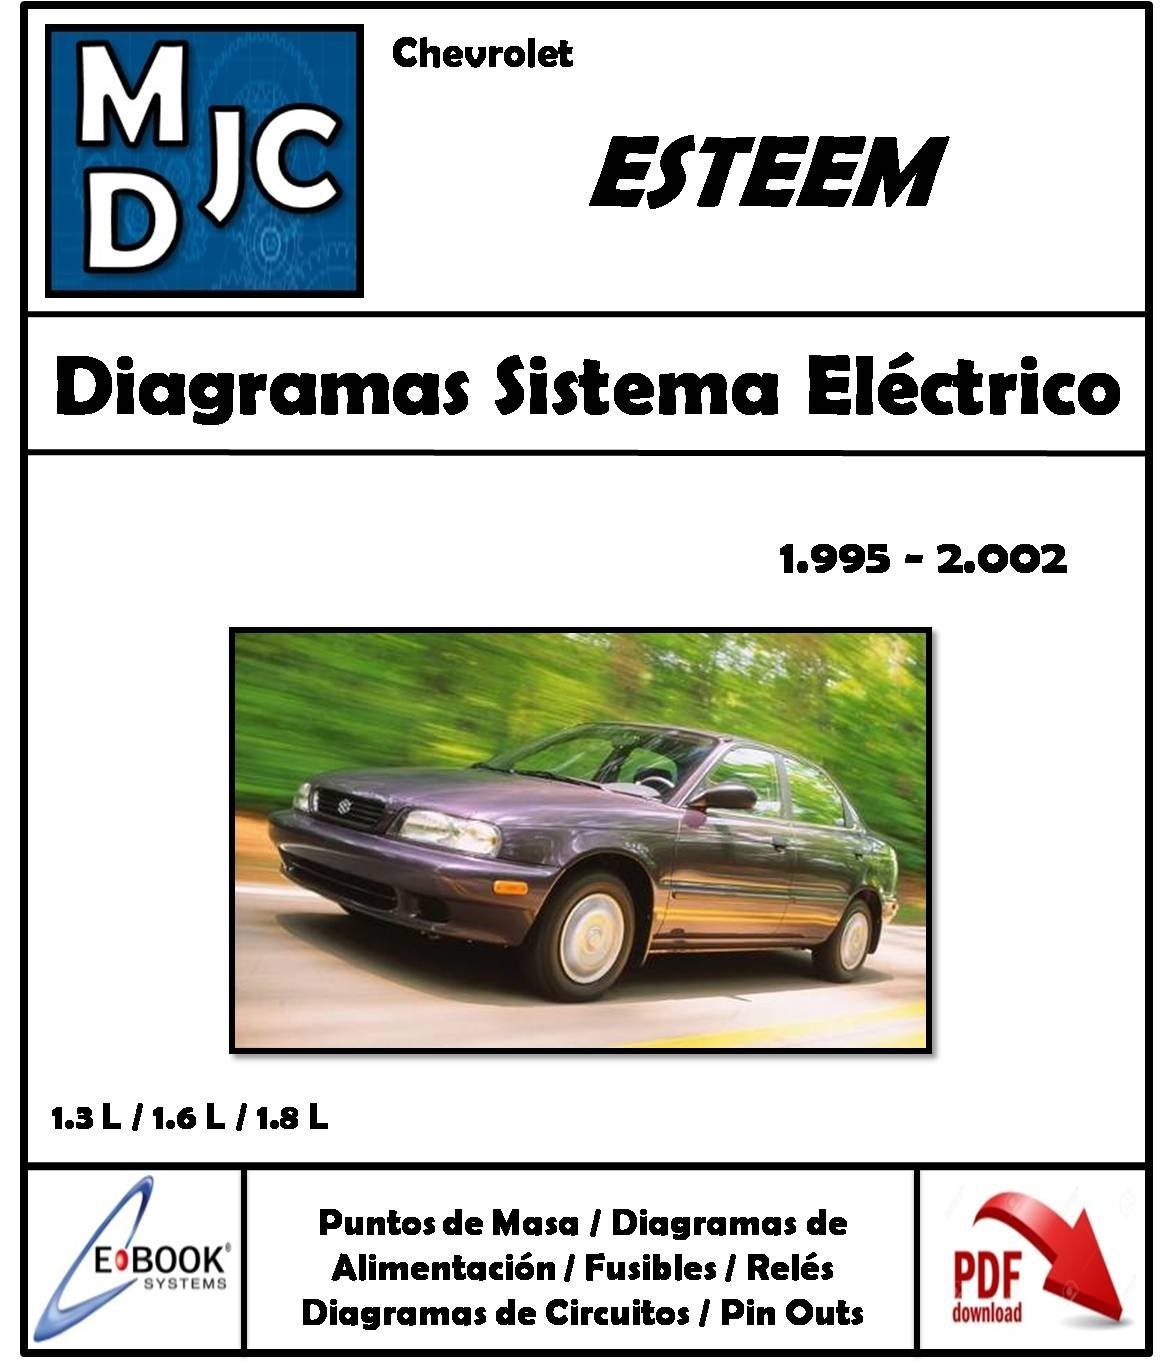 Diagramas Sistema electrico Chevrolet Suzuki - Esteem / Baleno 1995-2002